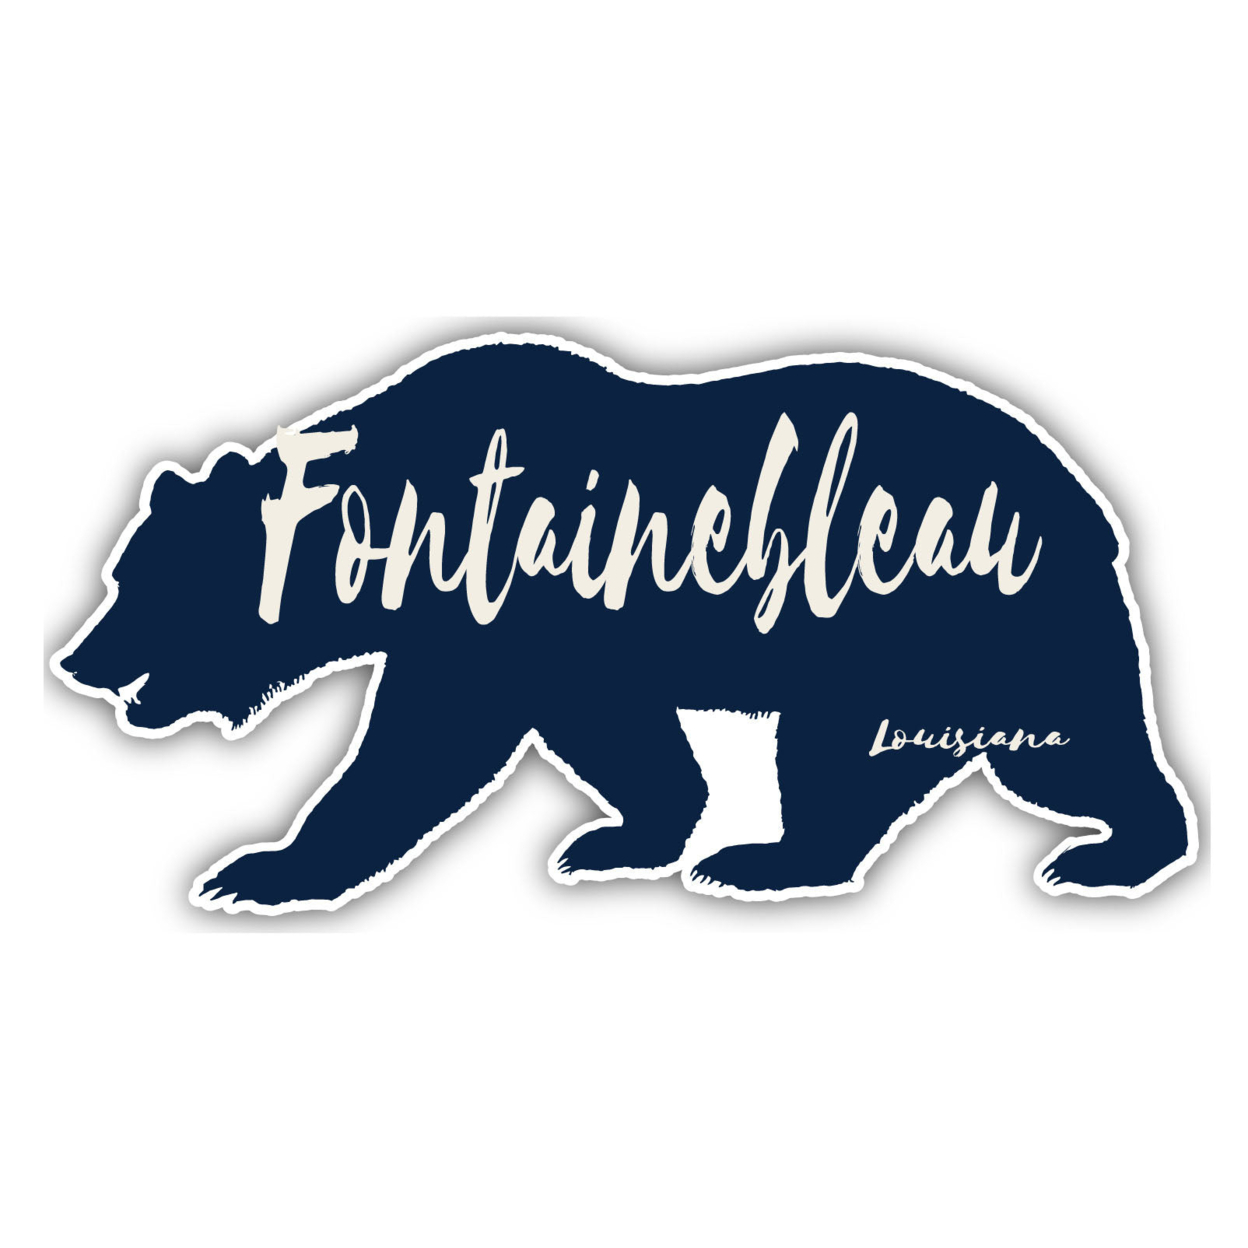 Fontainebleau Louisiana Souvenir Decorative Stickers (Choose Theme And Size) - Single Unit, 4-Inch, Bear